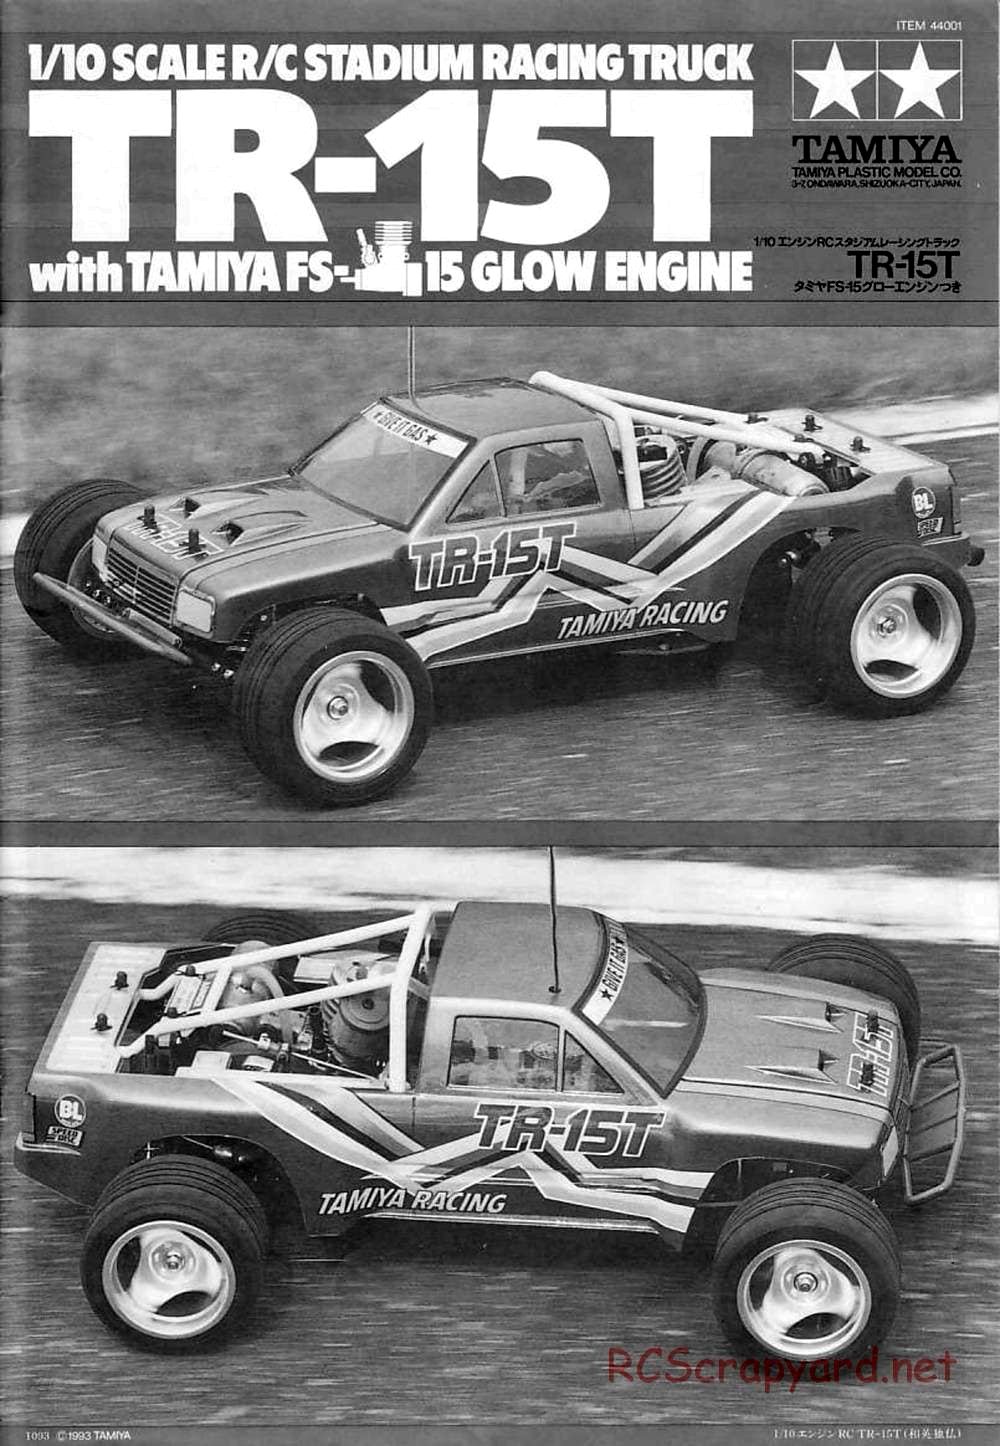 Tamiya - Stadium Racing Truck TR-15T Chassis - Manual - Page 1